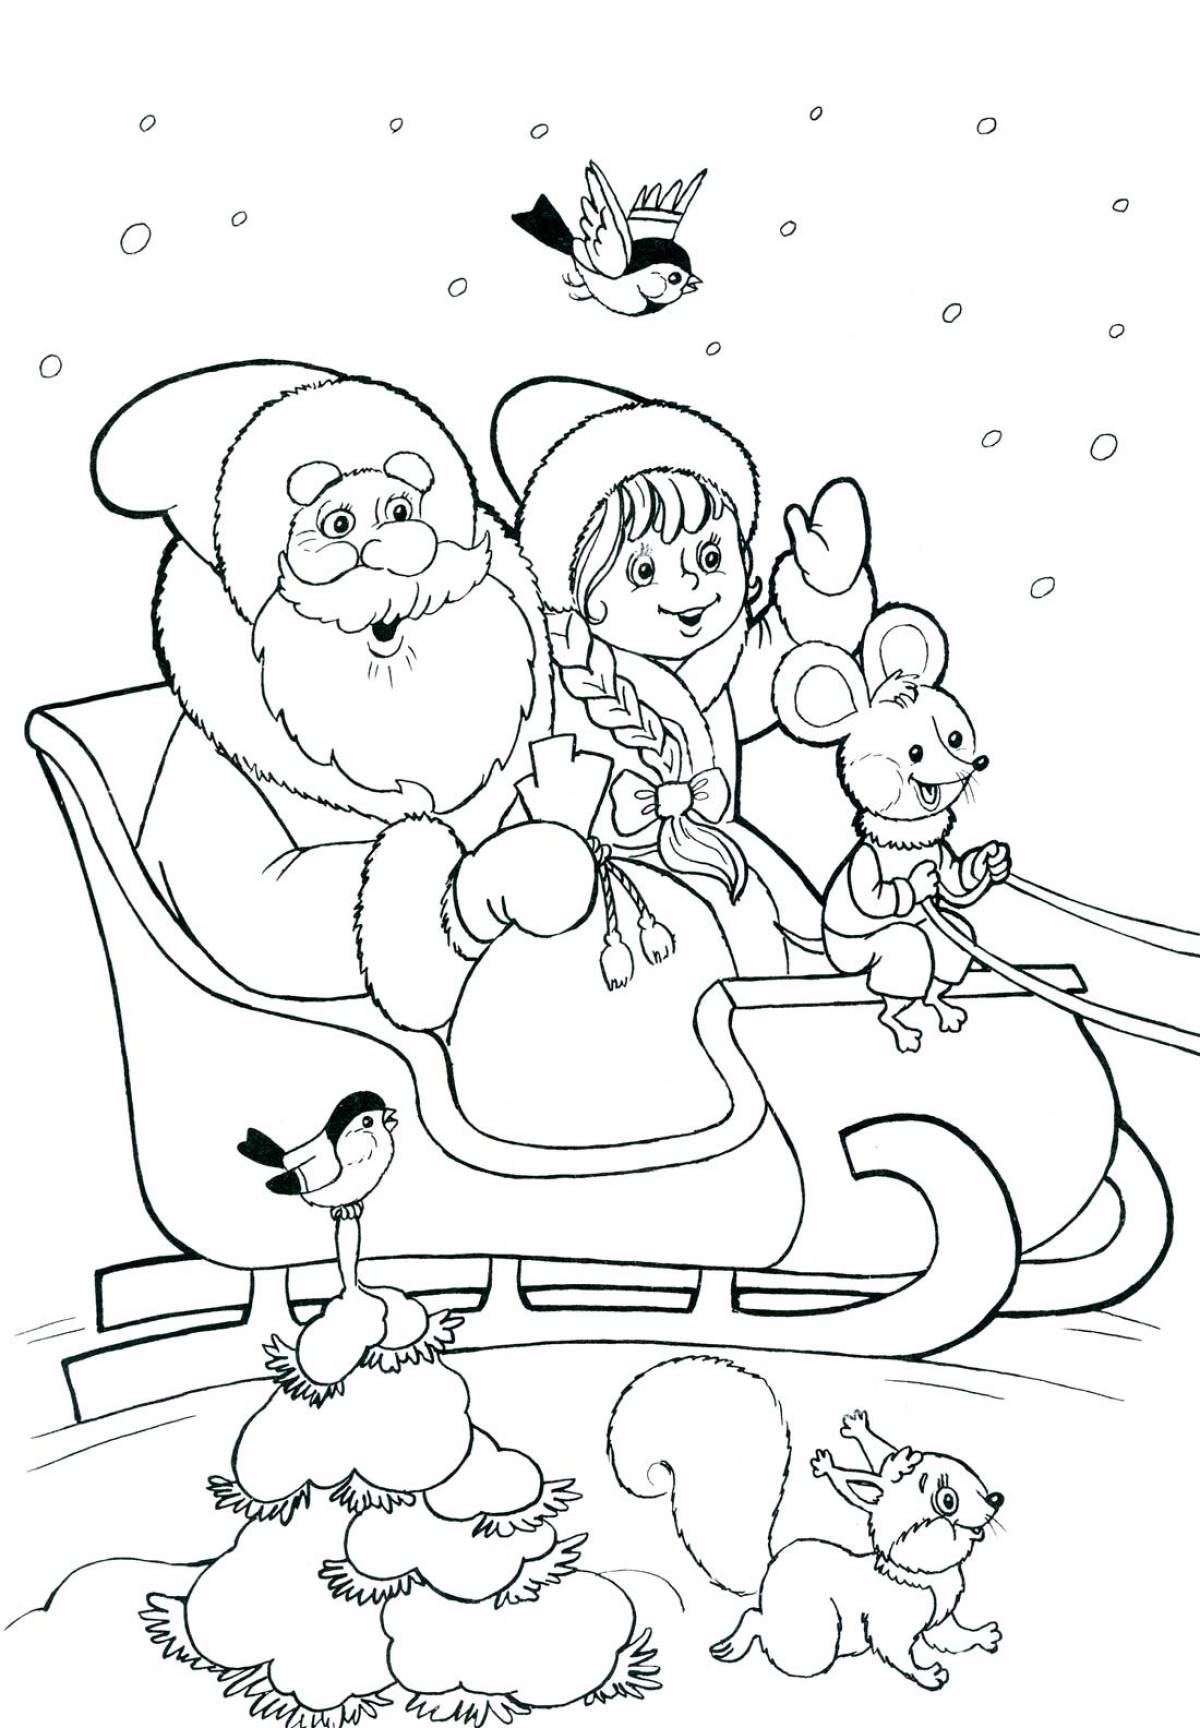 Santa Claus and Snow Maiden on a sleigh